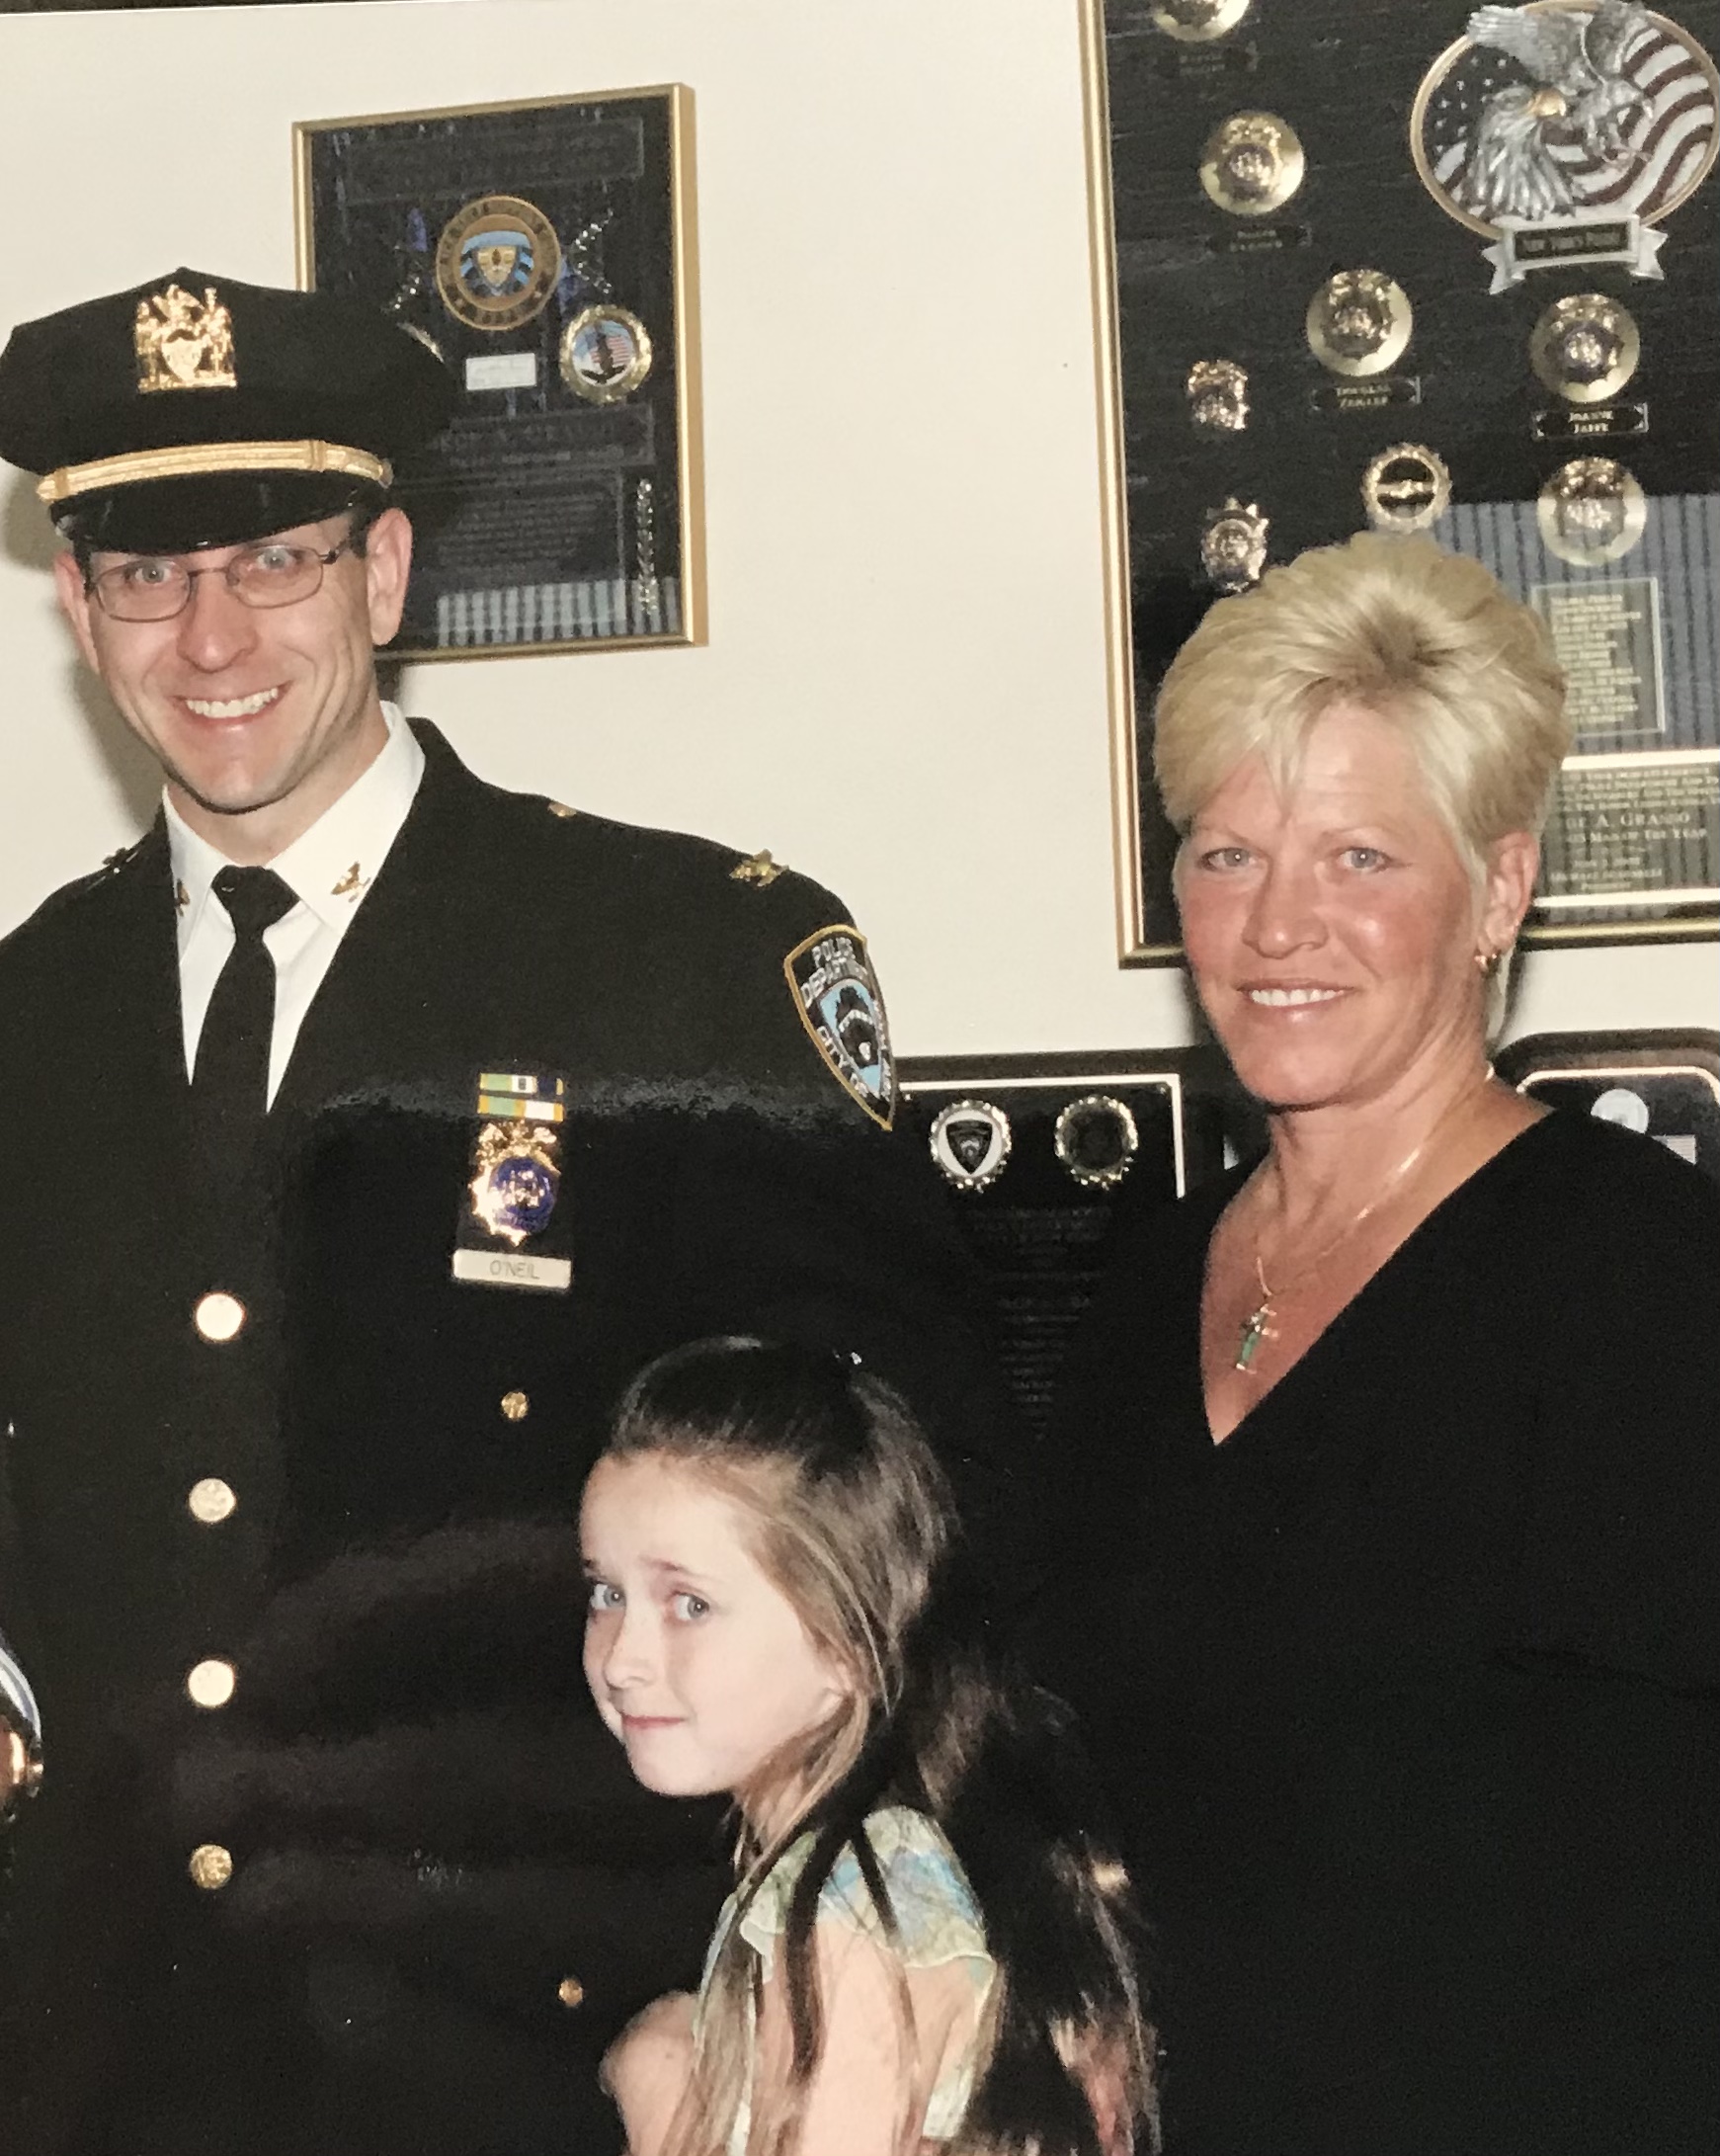 Inspector Michael E. O'Neil | New York City Police Department, New York